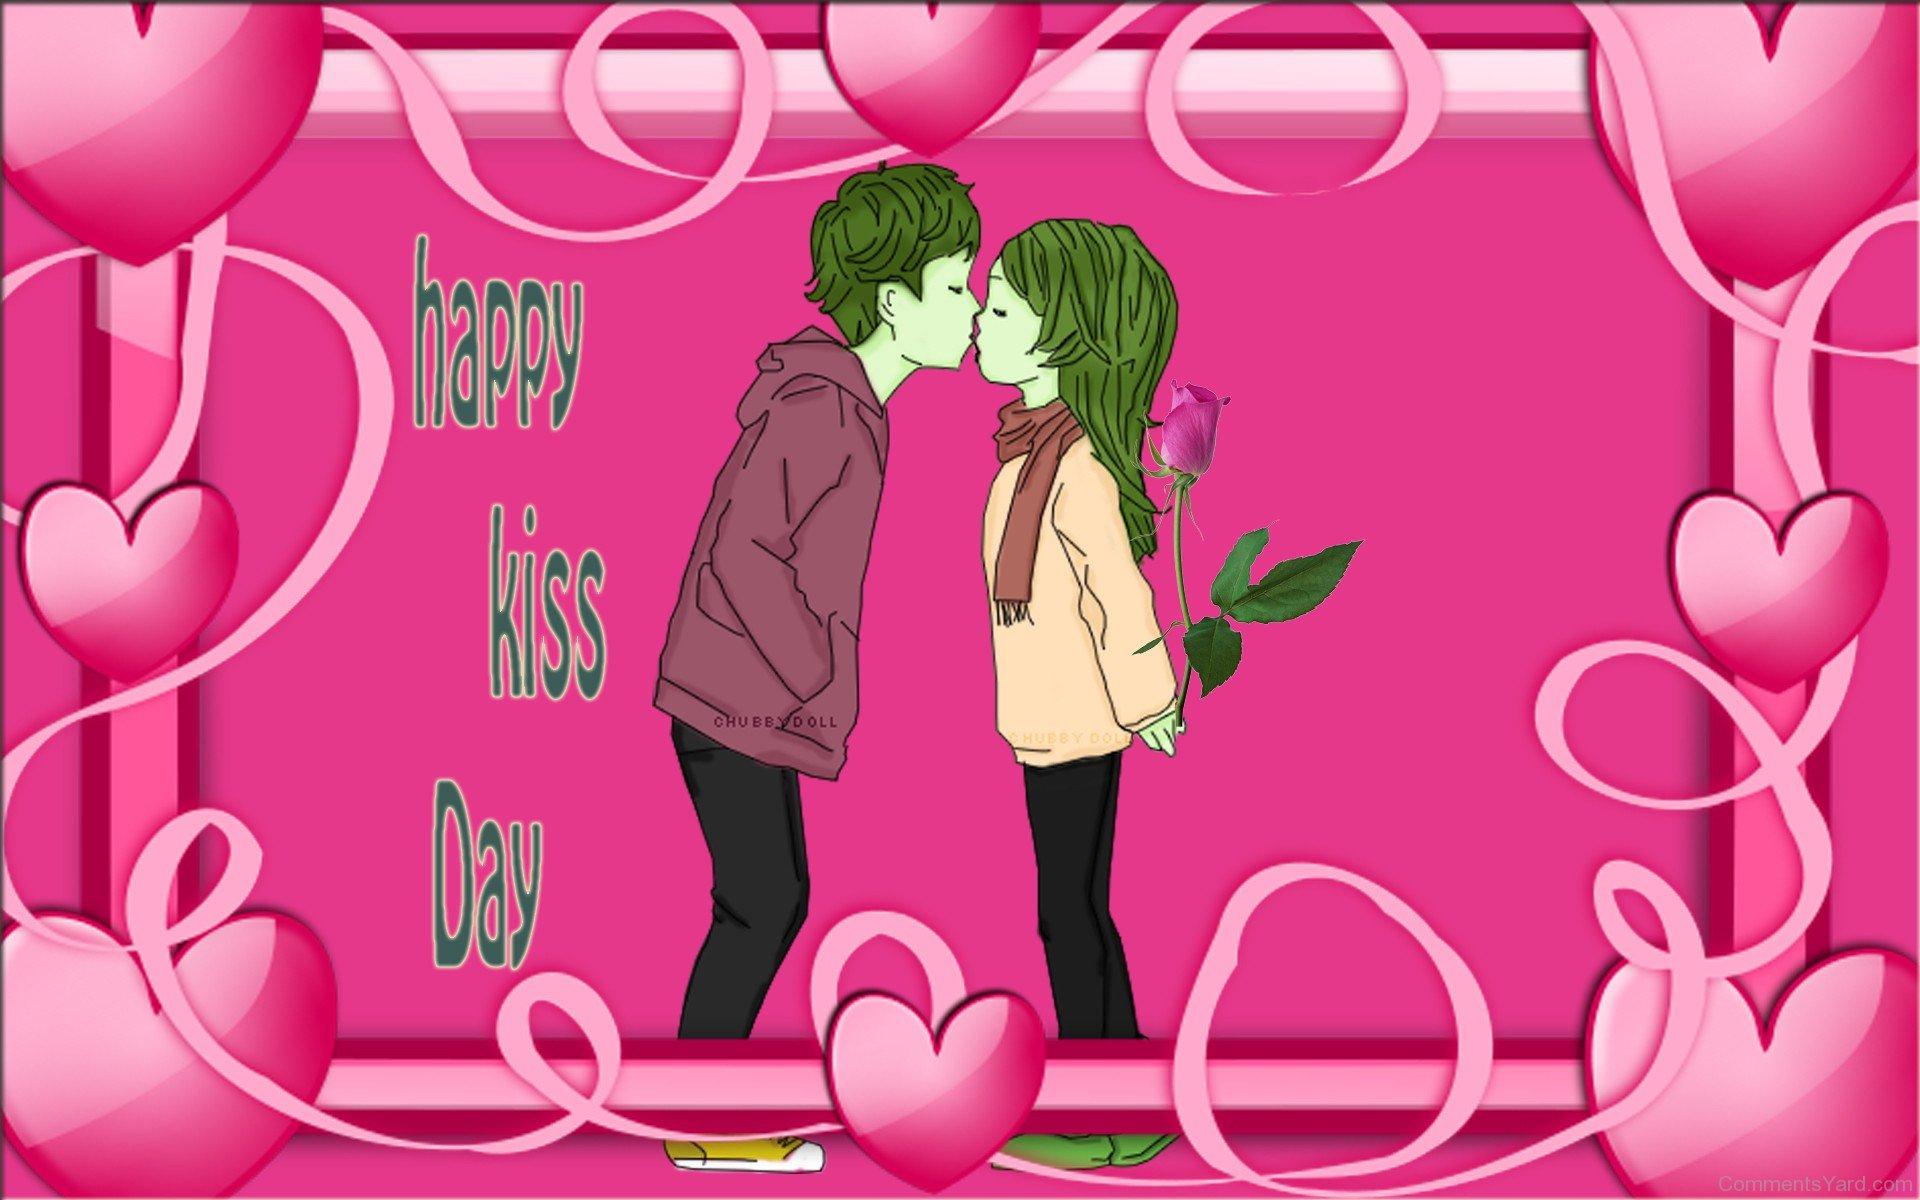 Happy Happy Kiss Day, Download Wallpaper